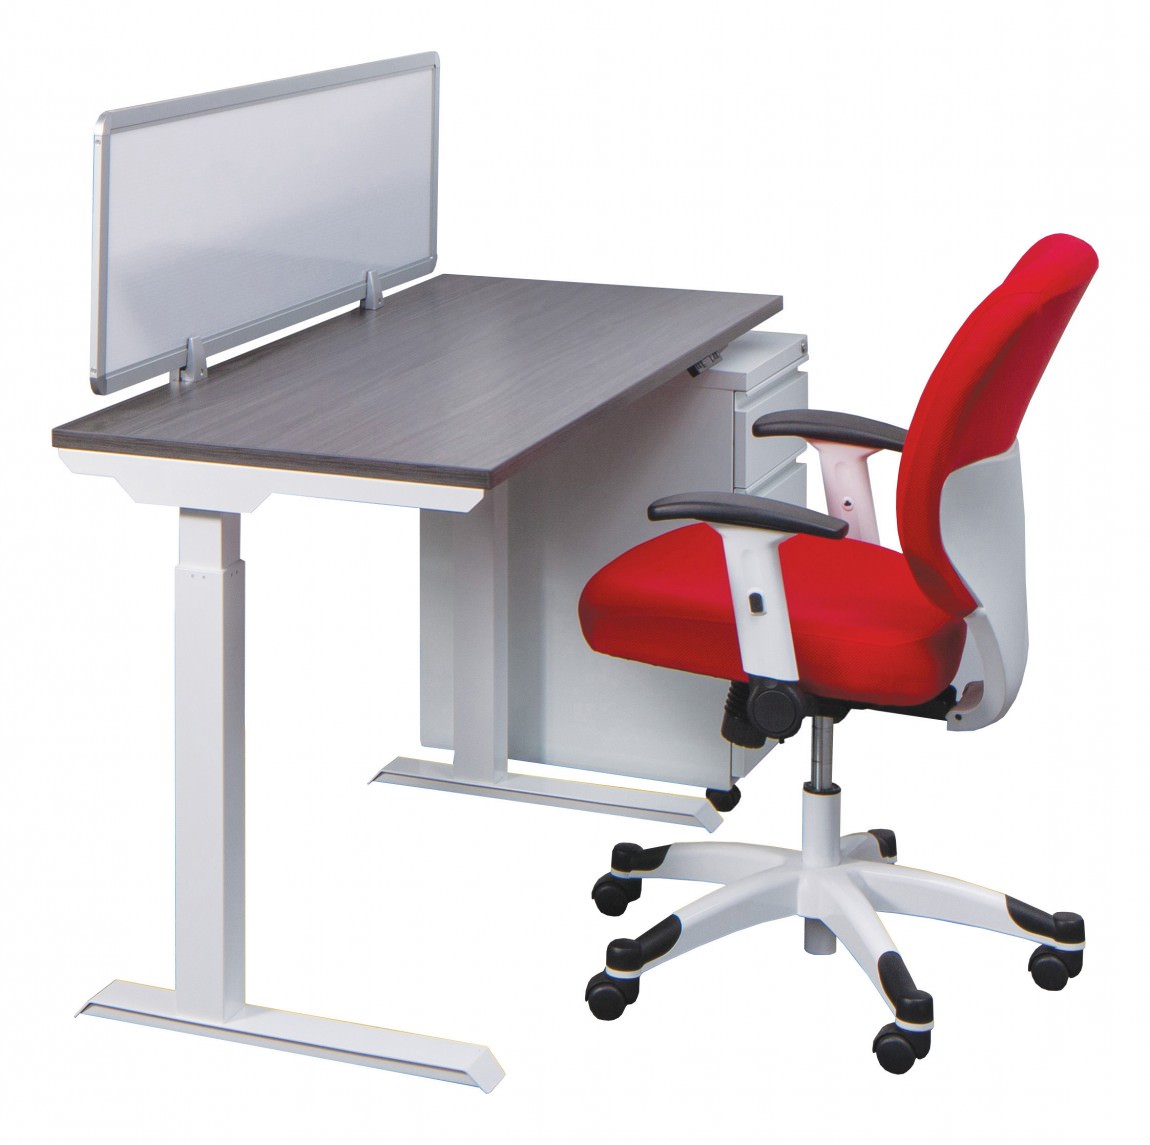 https://madisonliquidators.com/images/p/1150/27263-height-adjustable-desk-with-privacy-panel-1.jpg